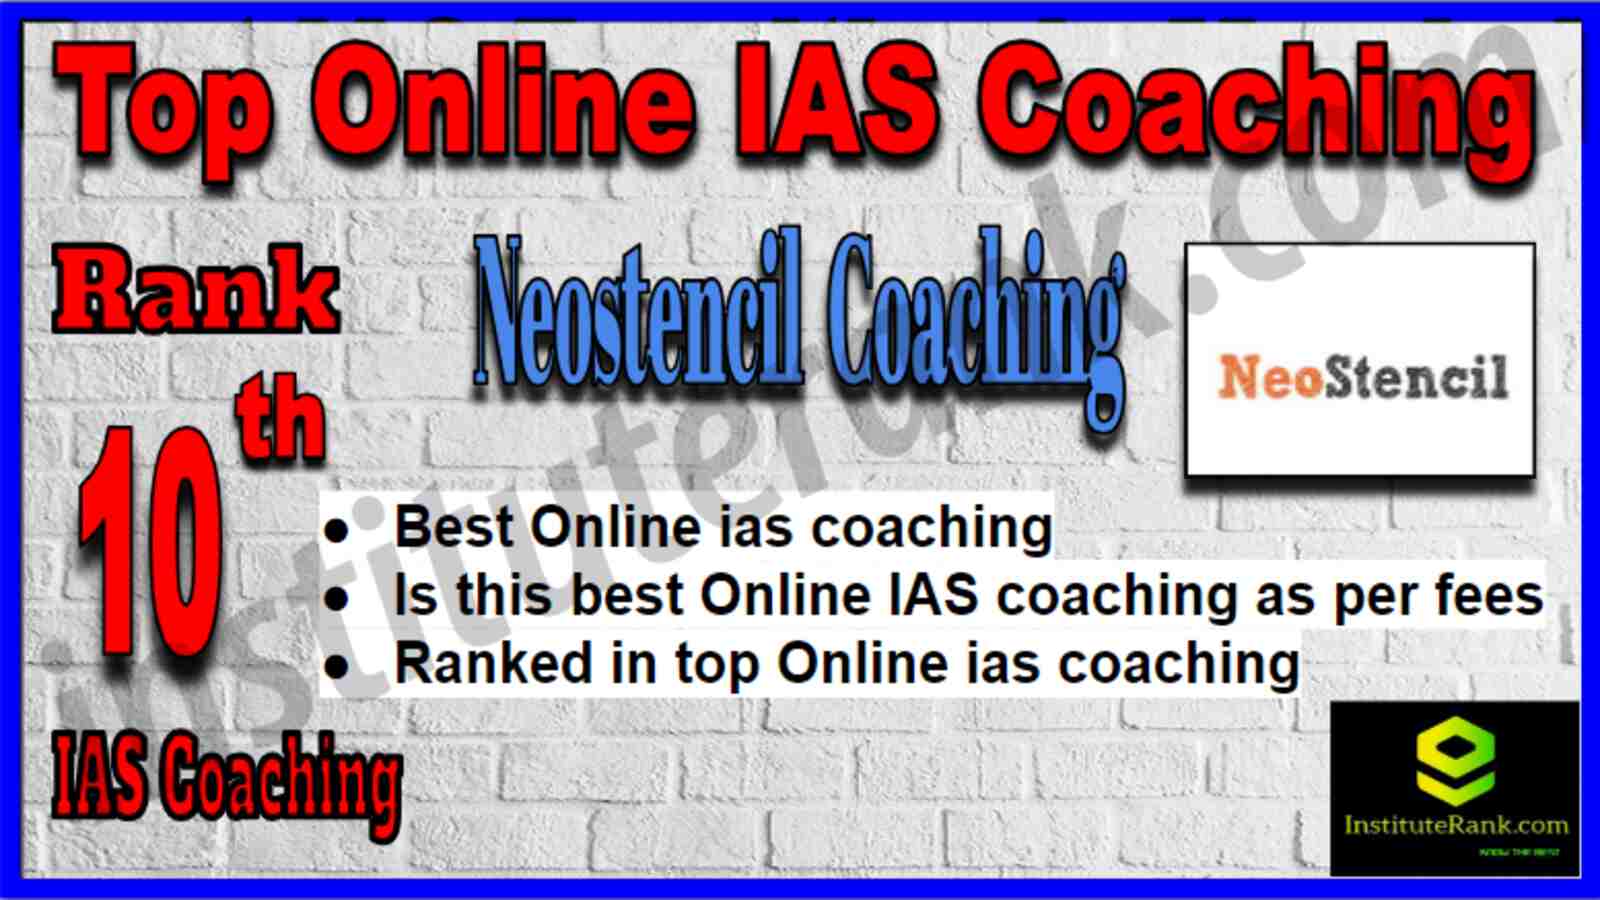 Rank 10 Top Online IAS Coaching